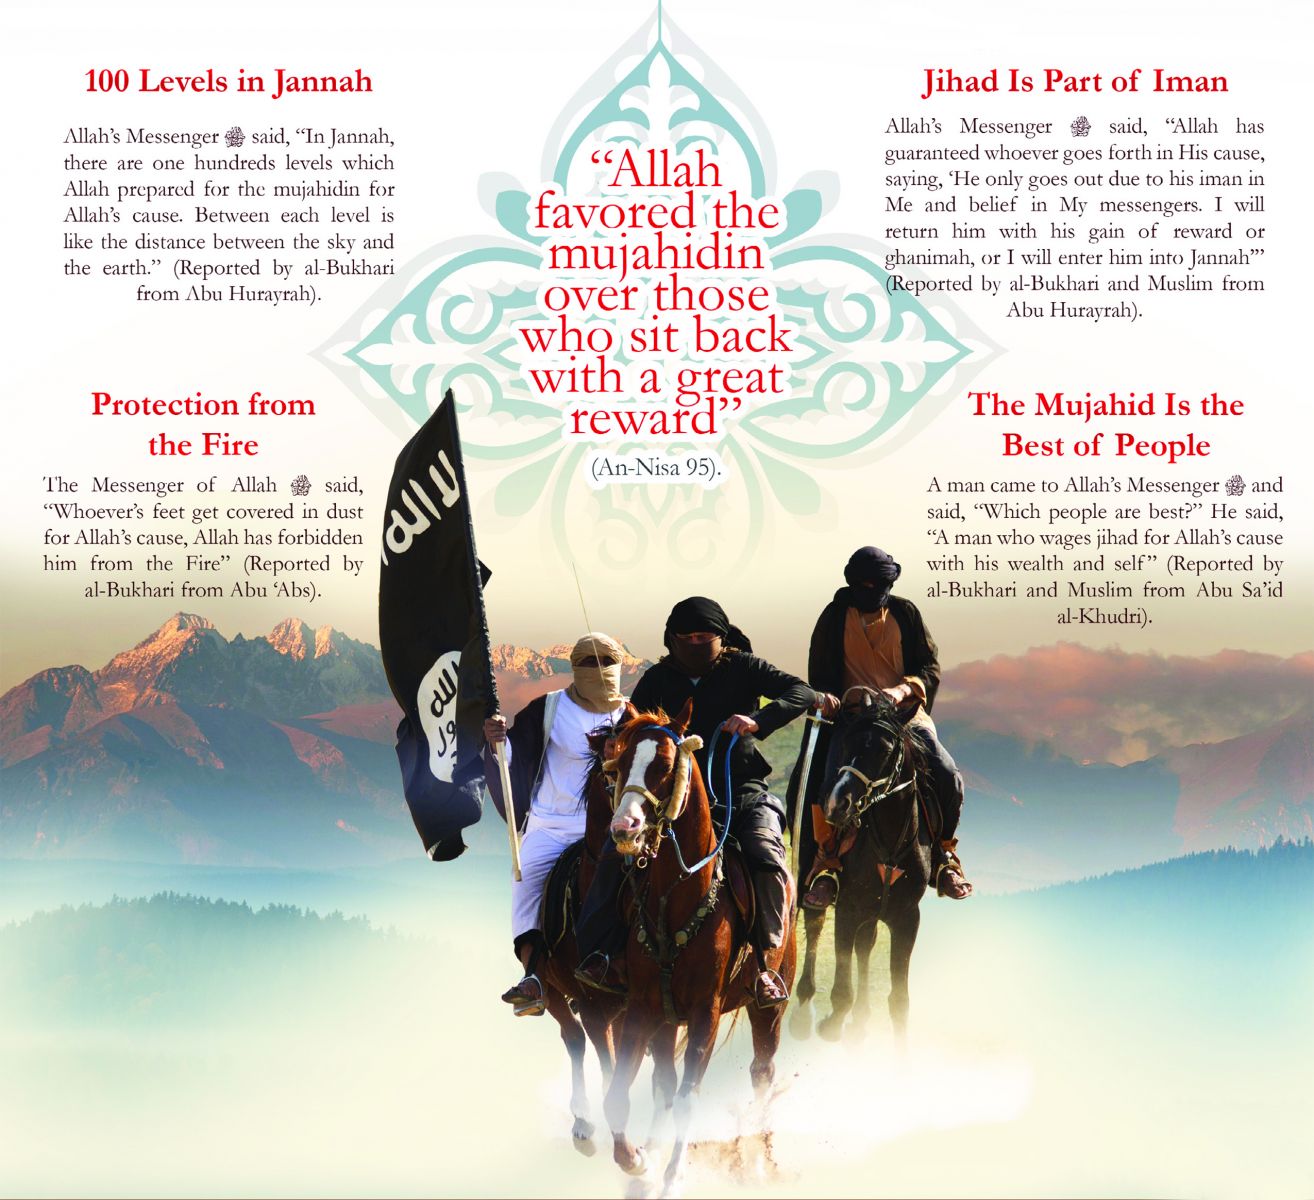 ISIS’s Rumiyah magazine on jihad. Image from Al-H ayat Media Center.